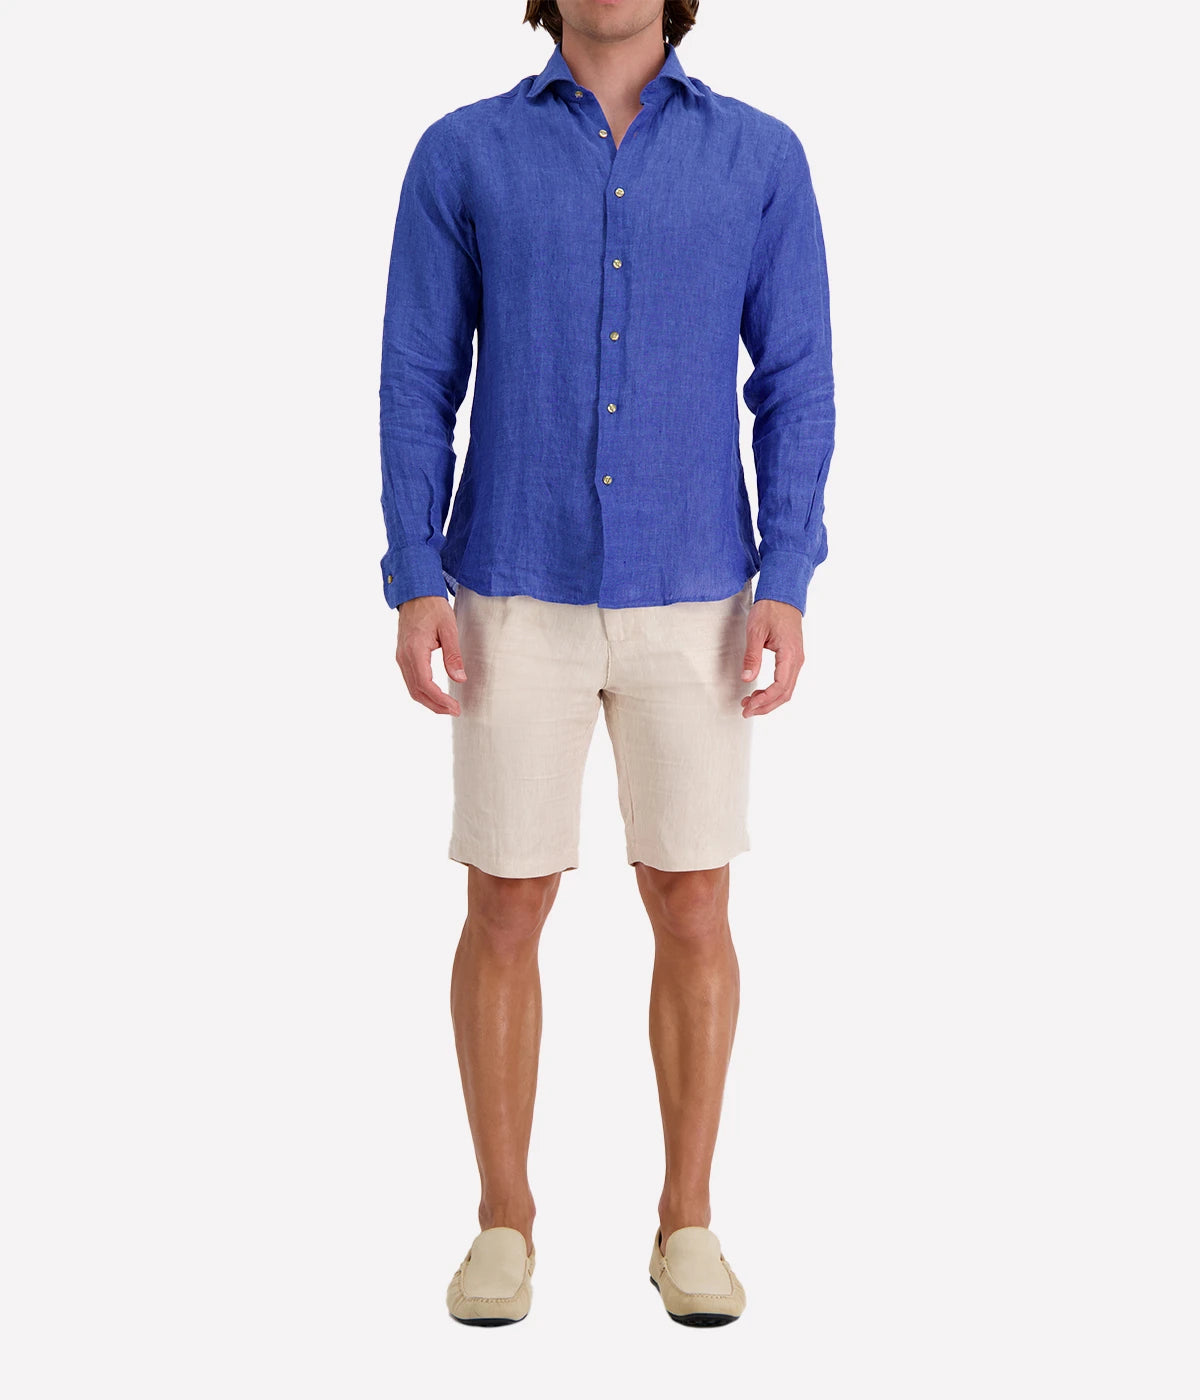 Slim Fit Linen Shirt in Marine Blue